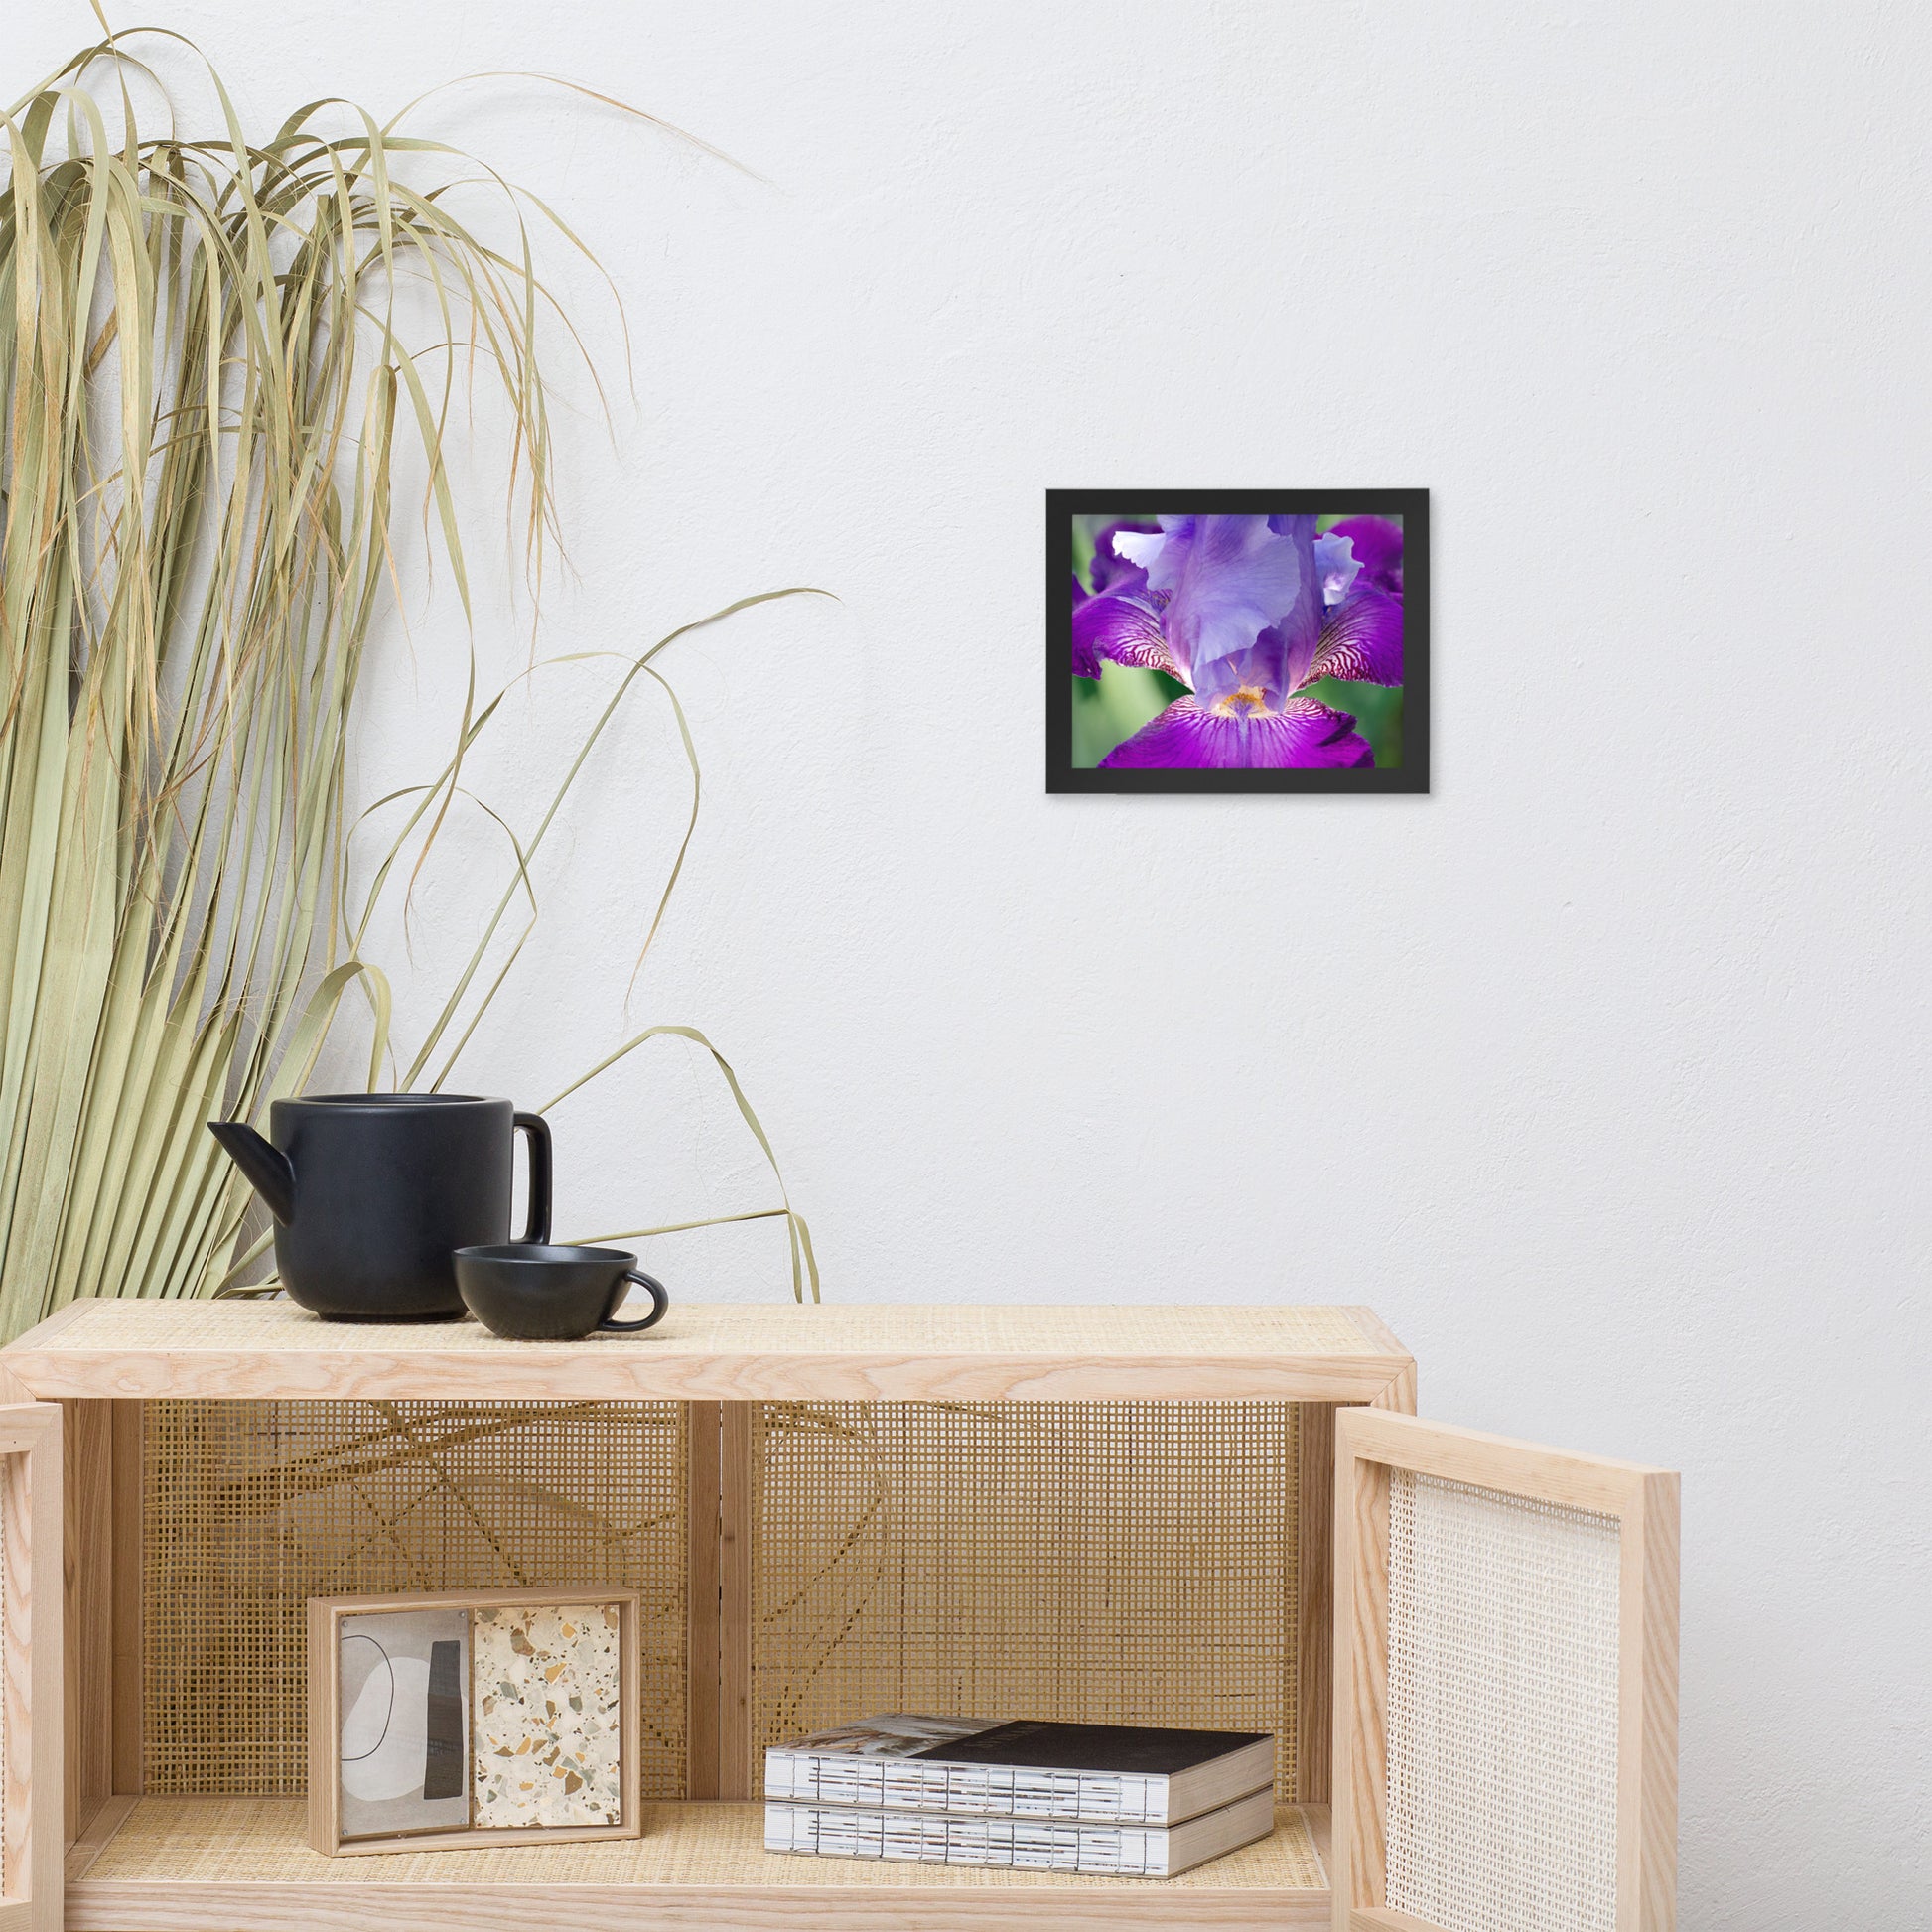 Small Bedroom Wall Art: Glowing Iris - Floral / Botanical / Nature Photo Framed Wall Art Print - Artwork - Wall Decor - Modern Home Decor